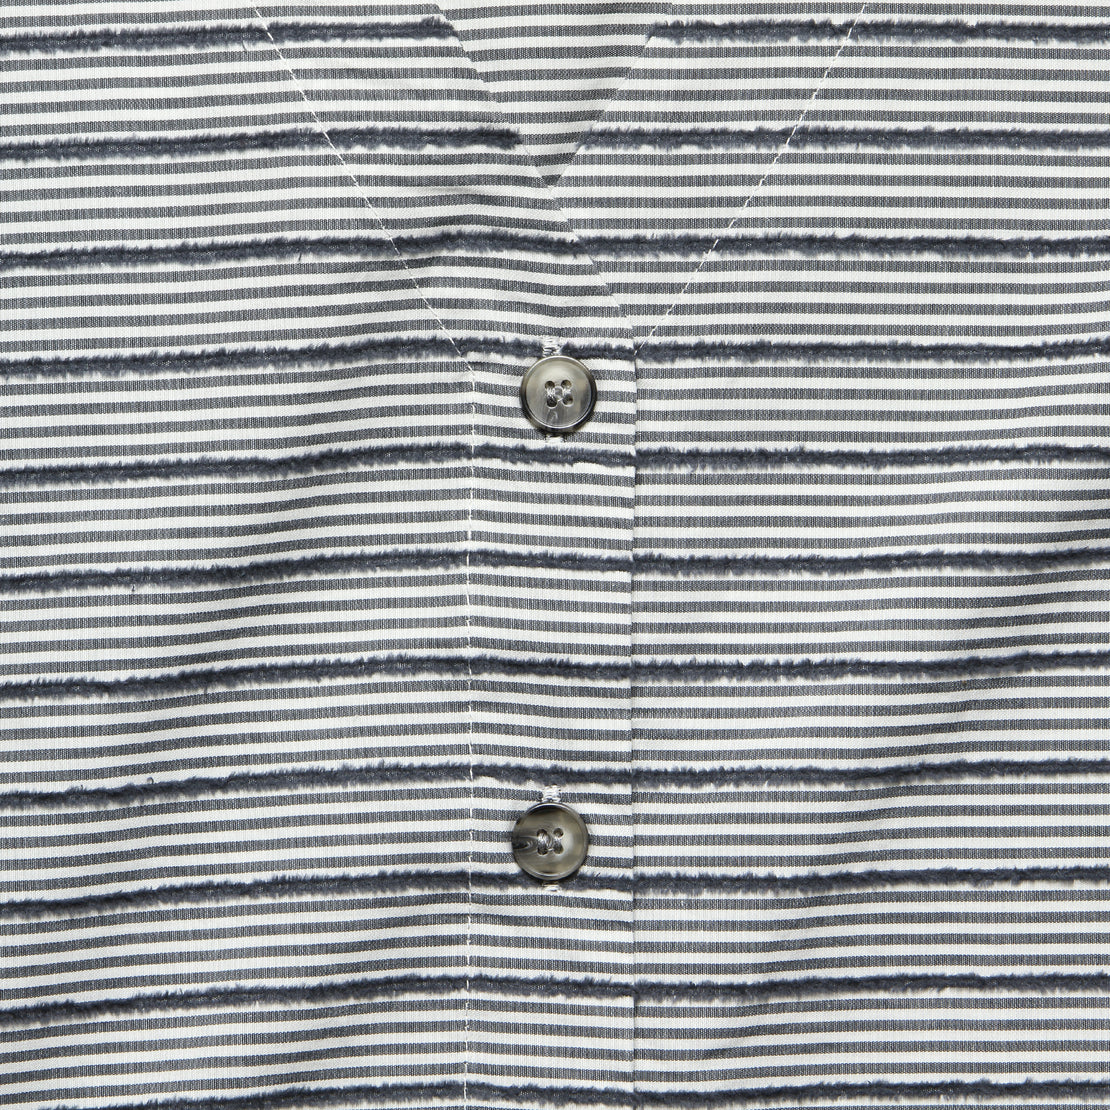 Sleeveless Nora Top - Textured Grey Stripe - Bridge & Burn - STAG Provisions - W - Tops - Sleeveless